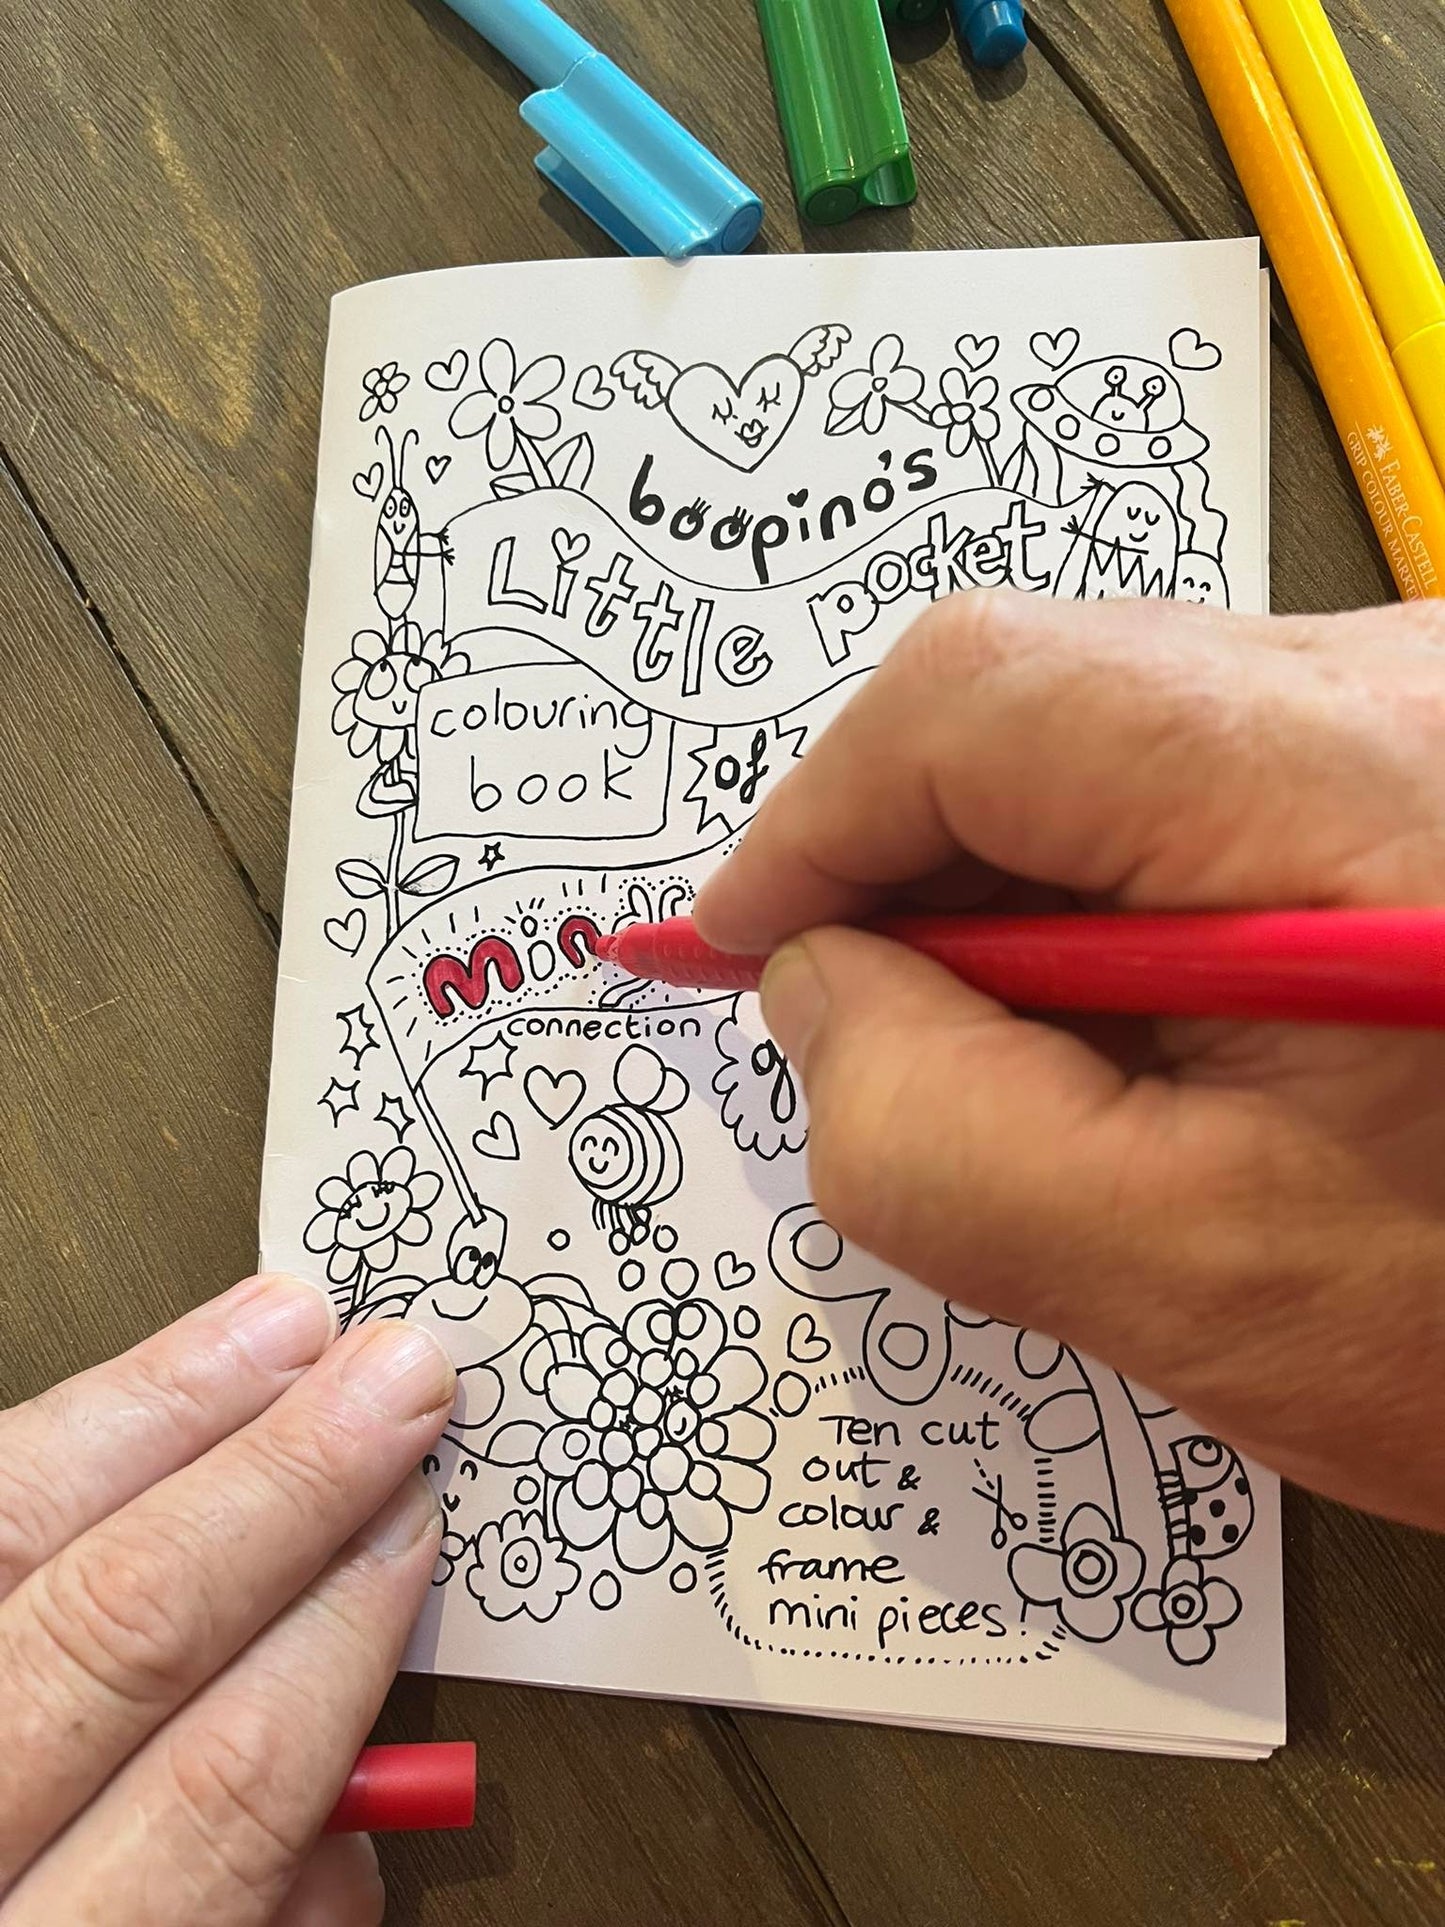 Boopino's mini mindfulness colouring book!